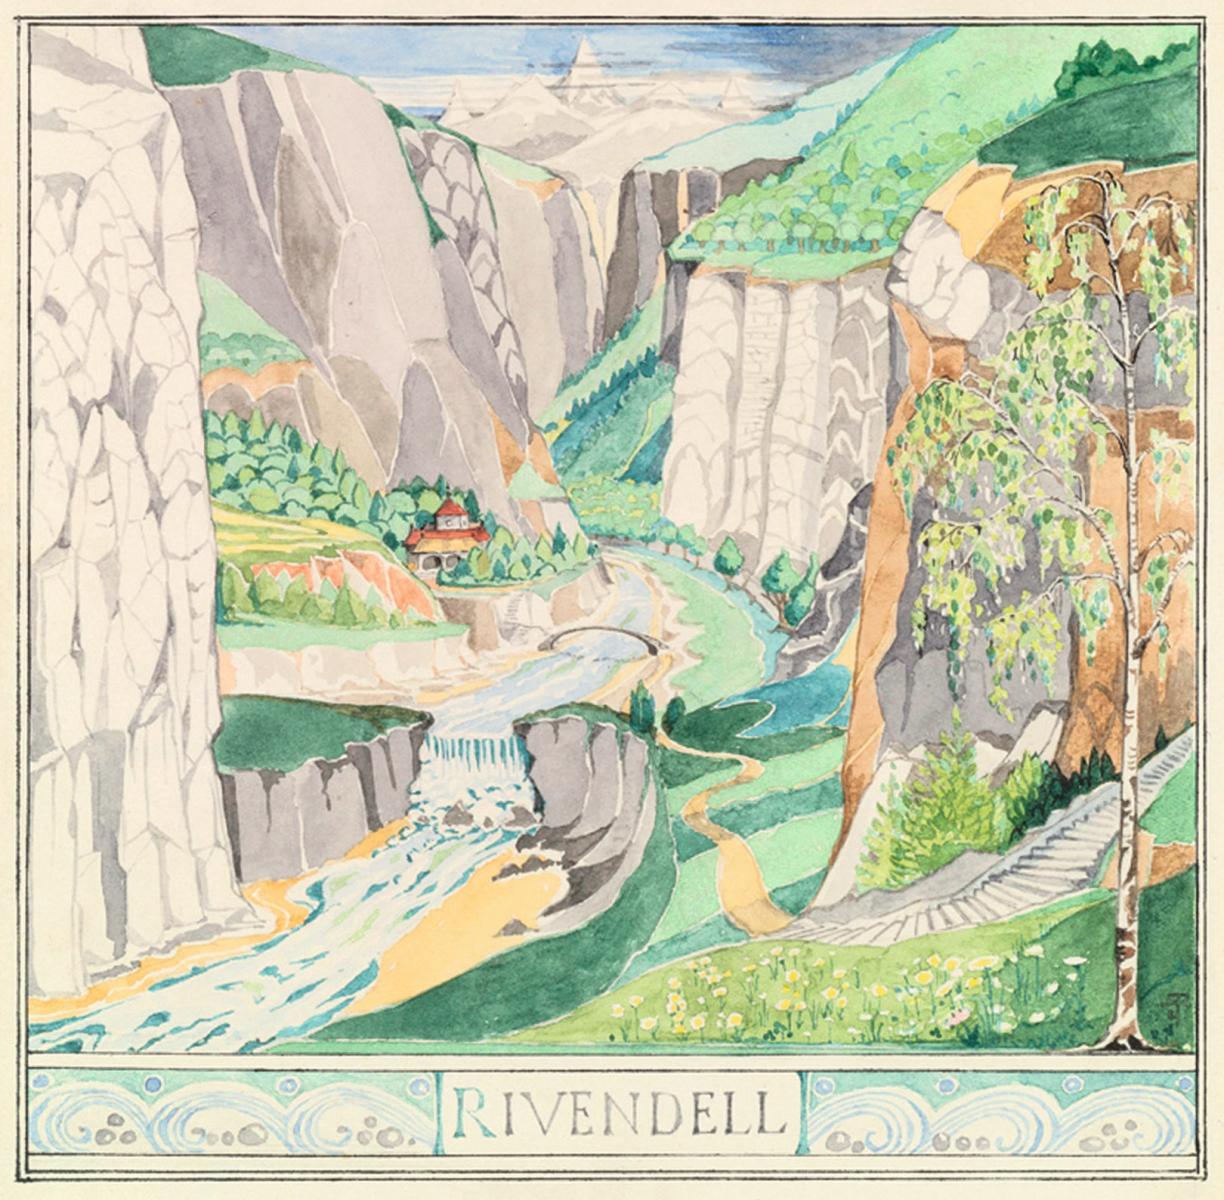 Portrait of Rivendell by J.R.R. Tolkien